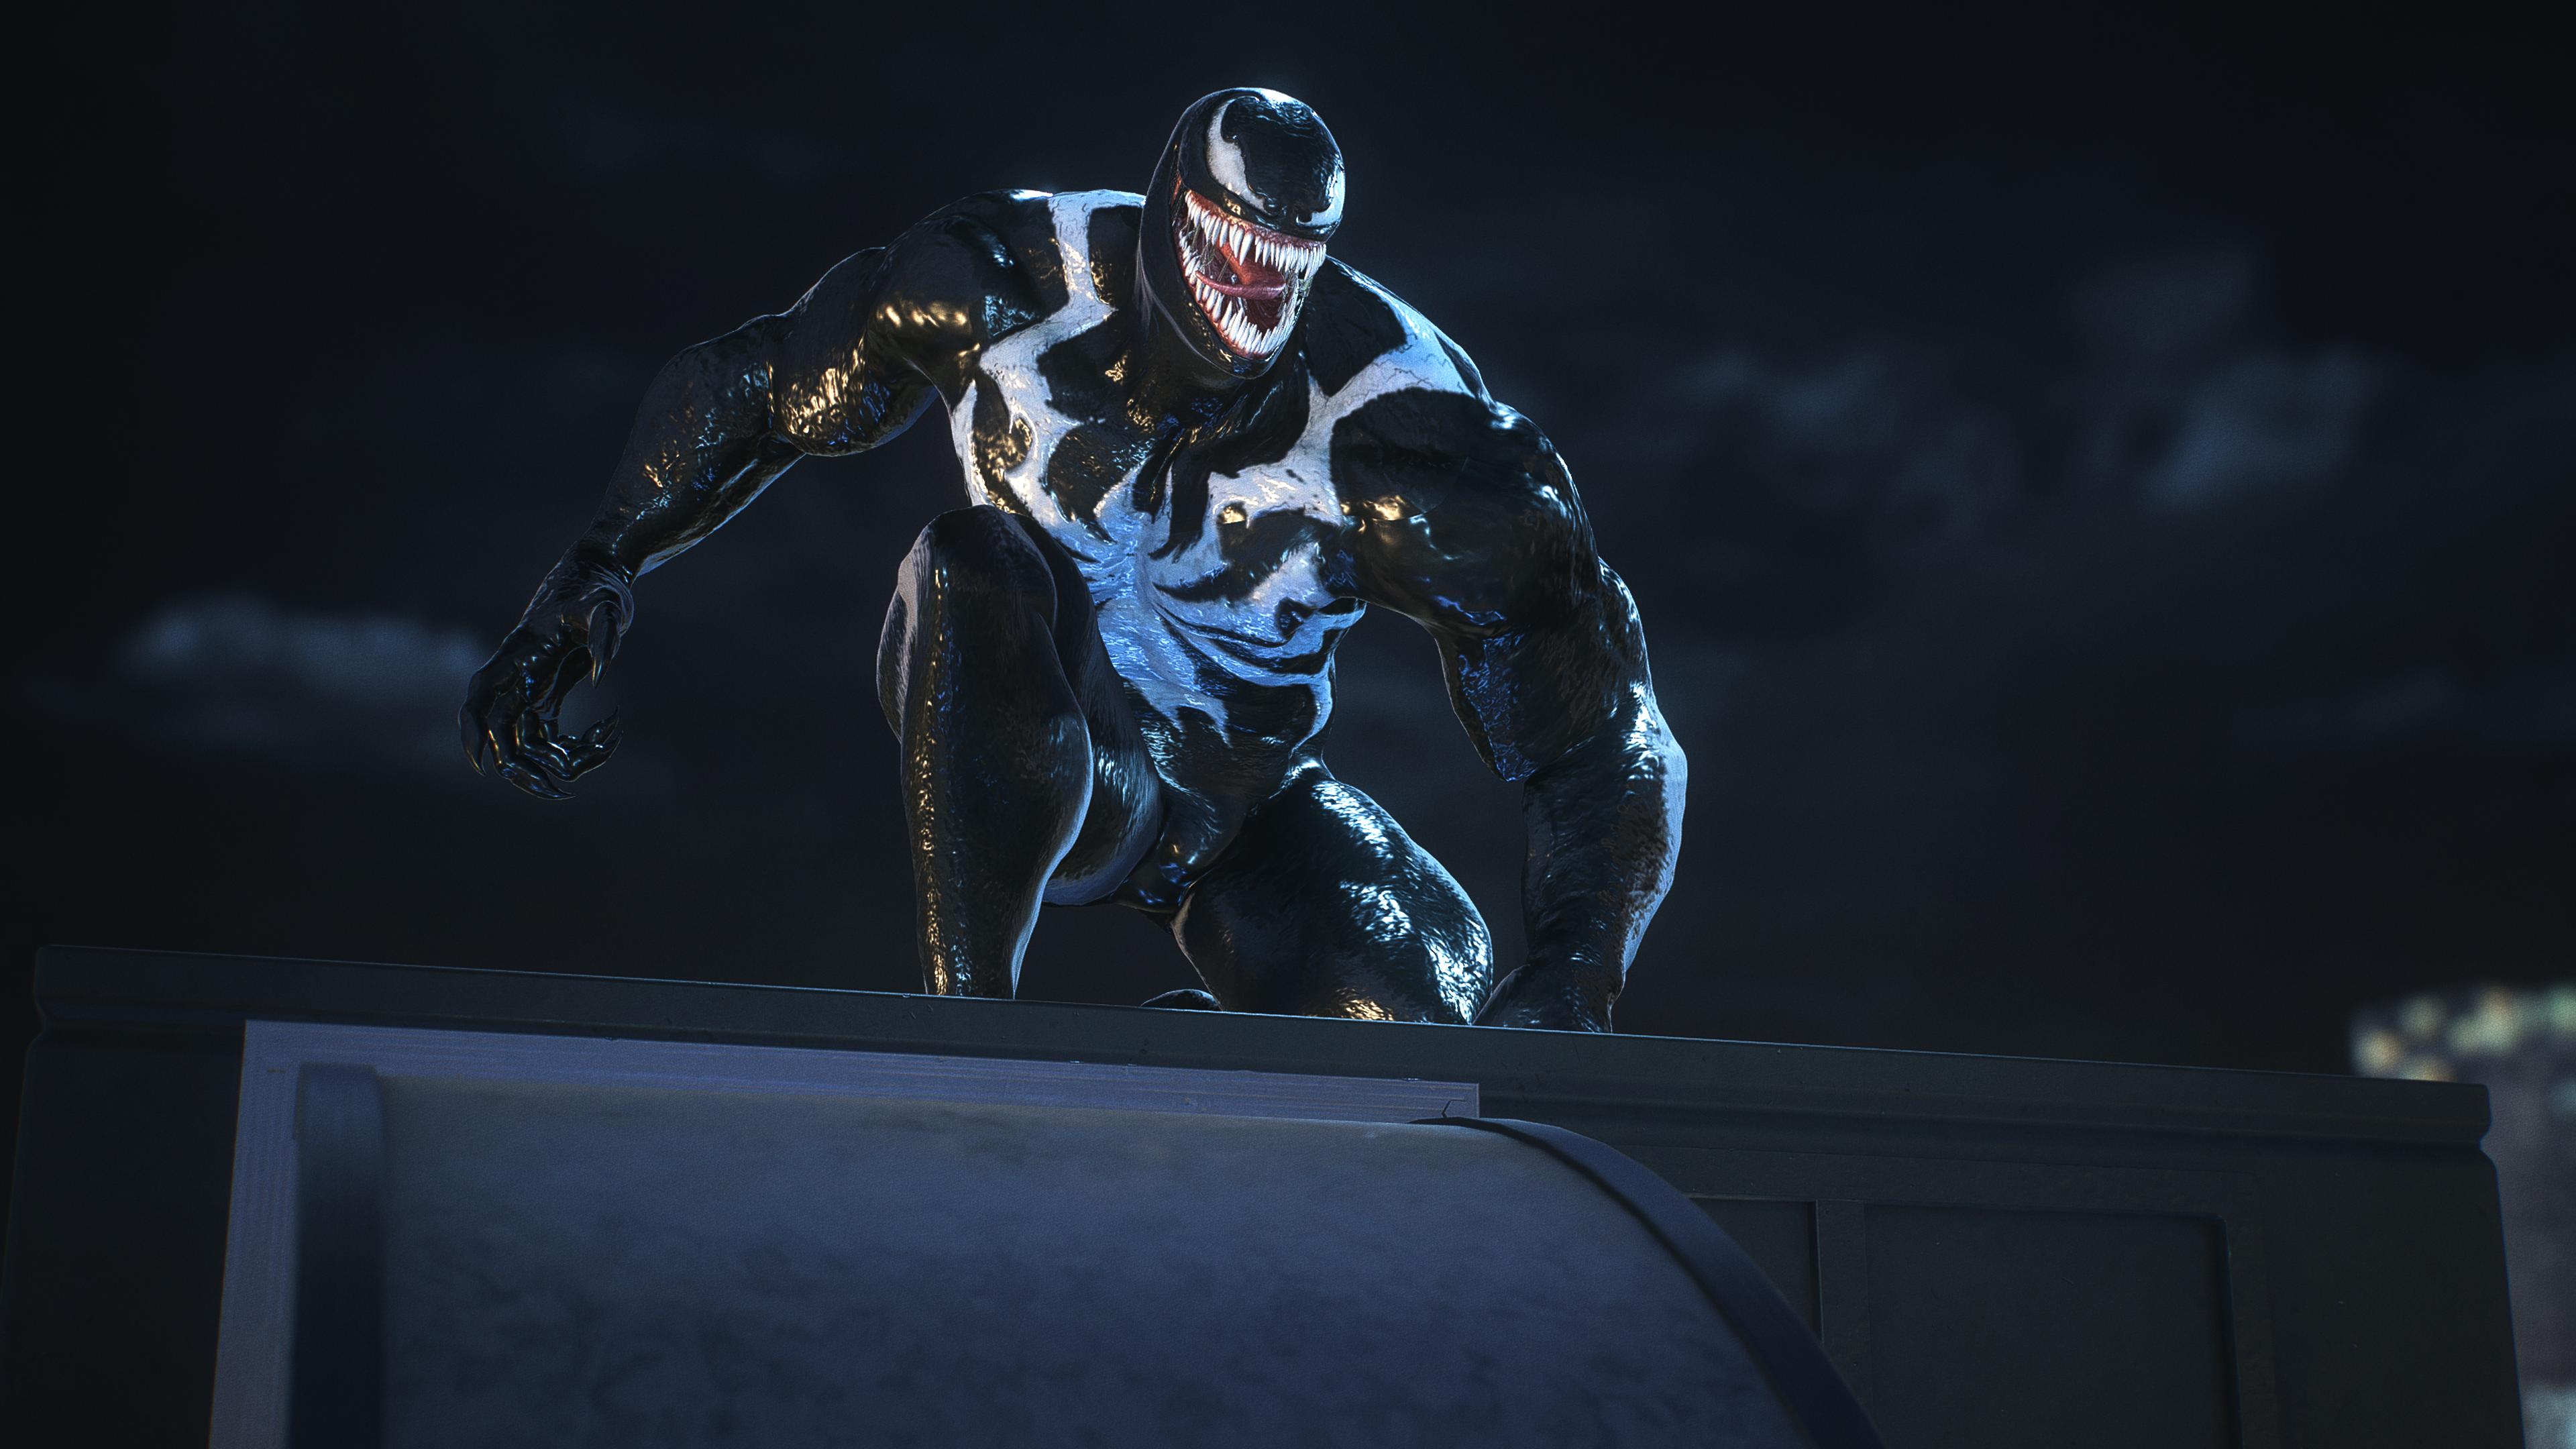 Marvel's Spider-Man 2: hands-on report – gameplay details on